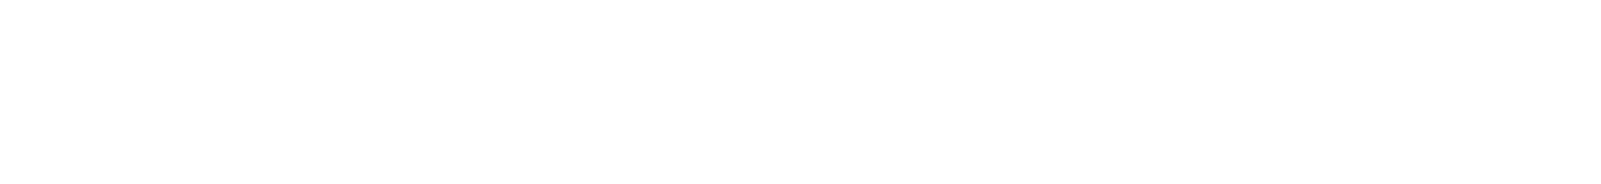 Kadokawa logo grand pour les fonds sombres (PNG transparent)